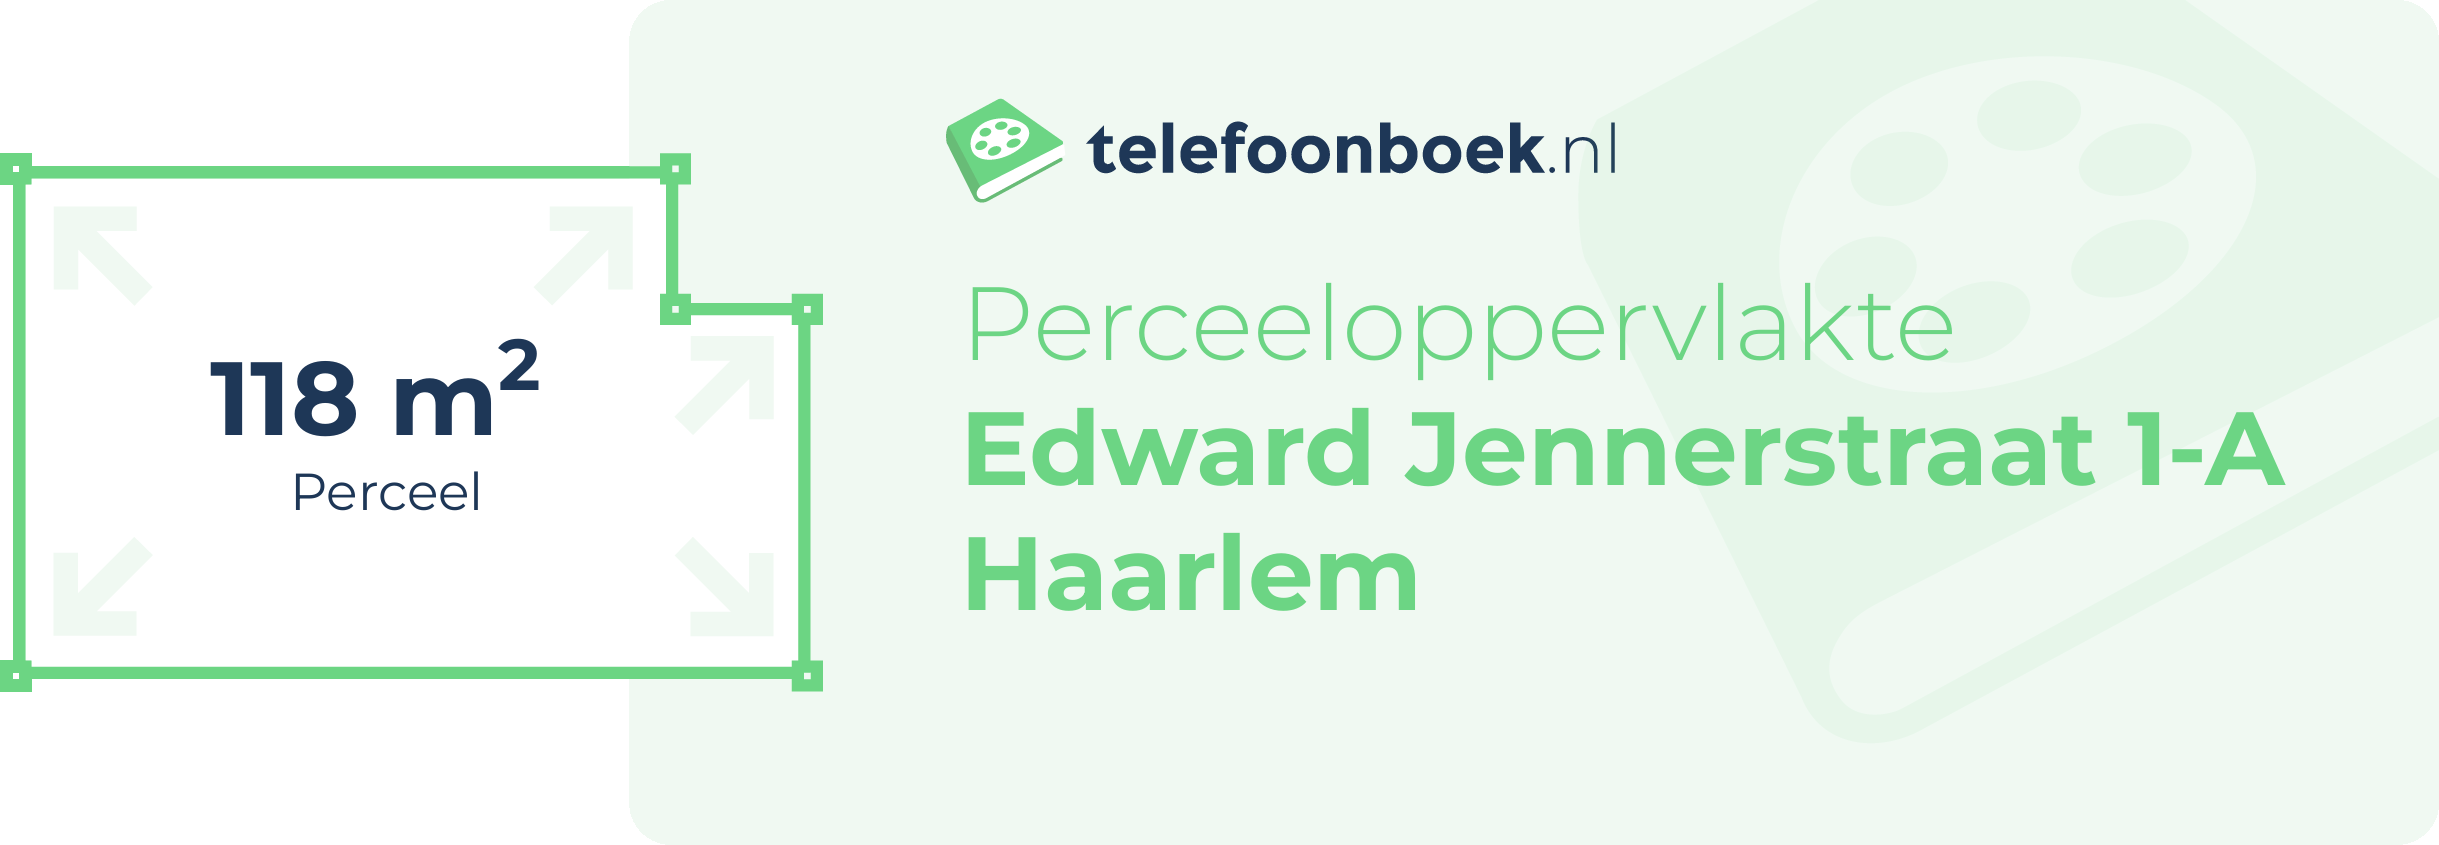 Perceeloppervlakte Edward Jennerstraat 1-A Haarlem